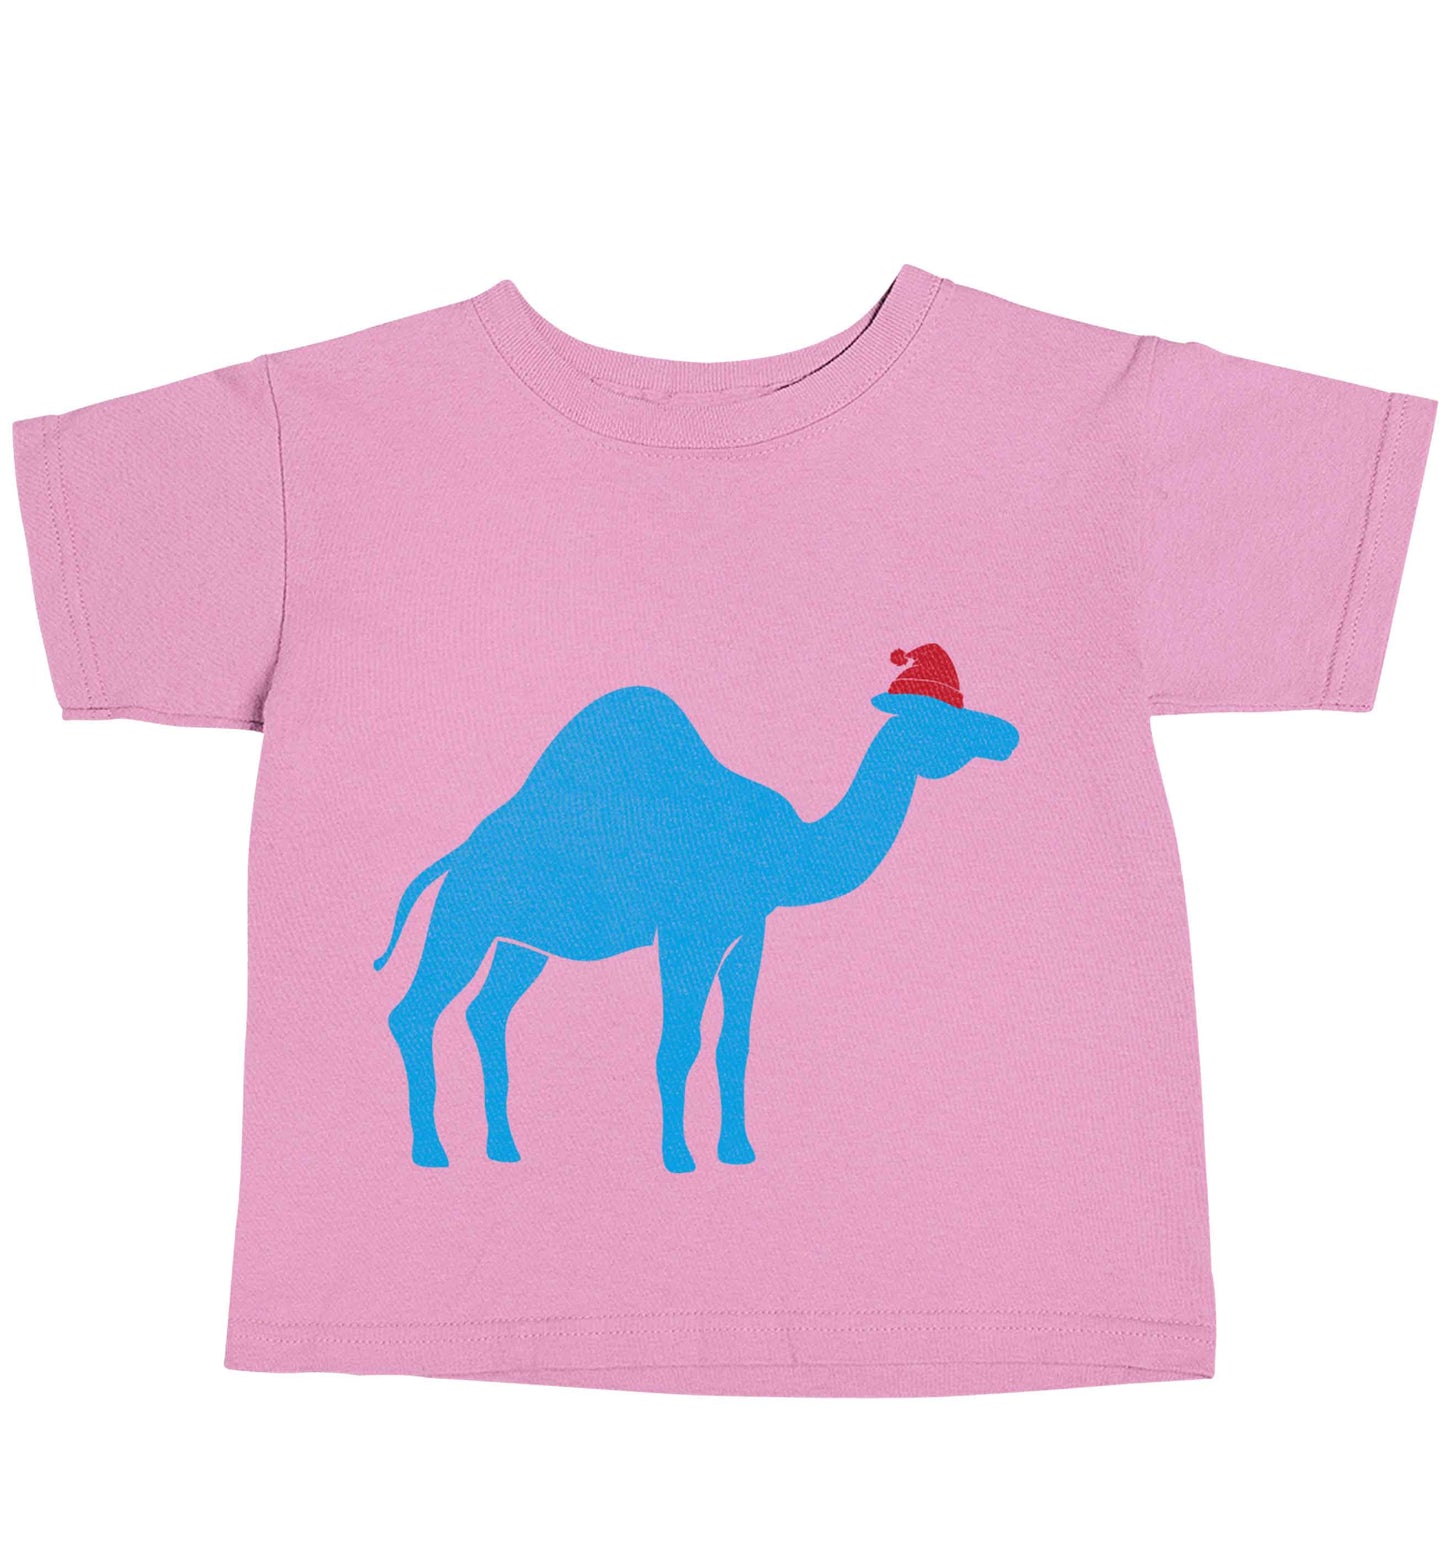 Blue camel santa light pink baby toddler Tshirt 2 Years